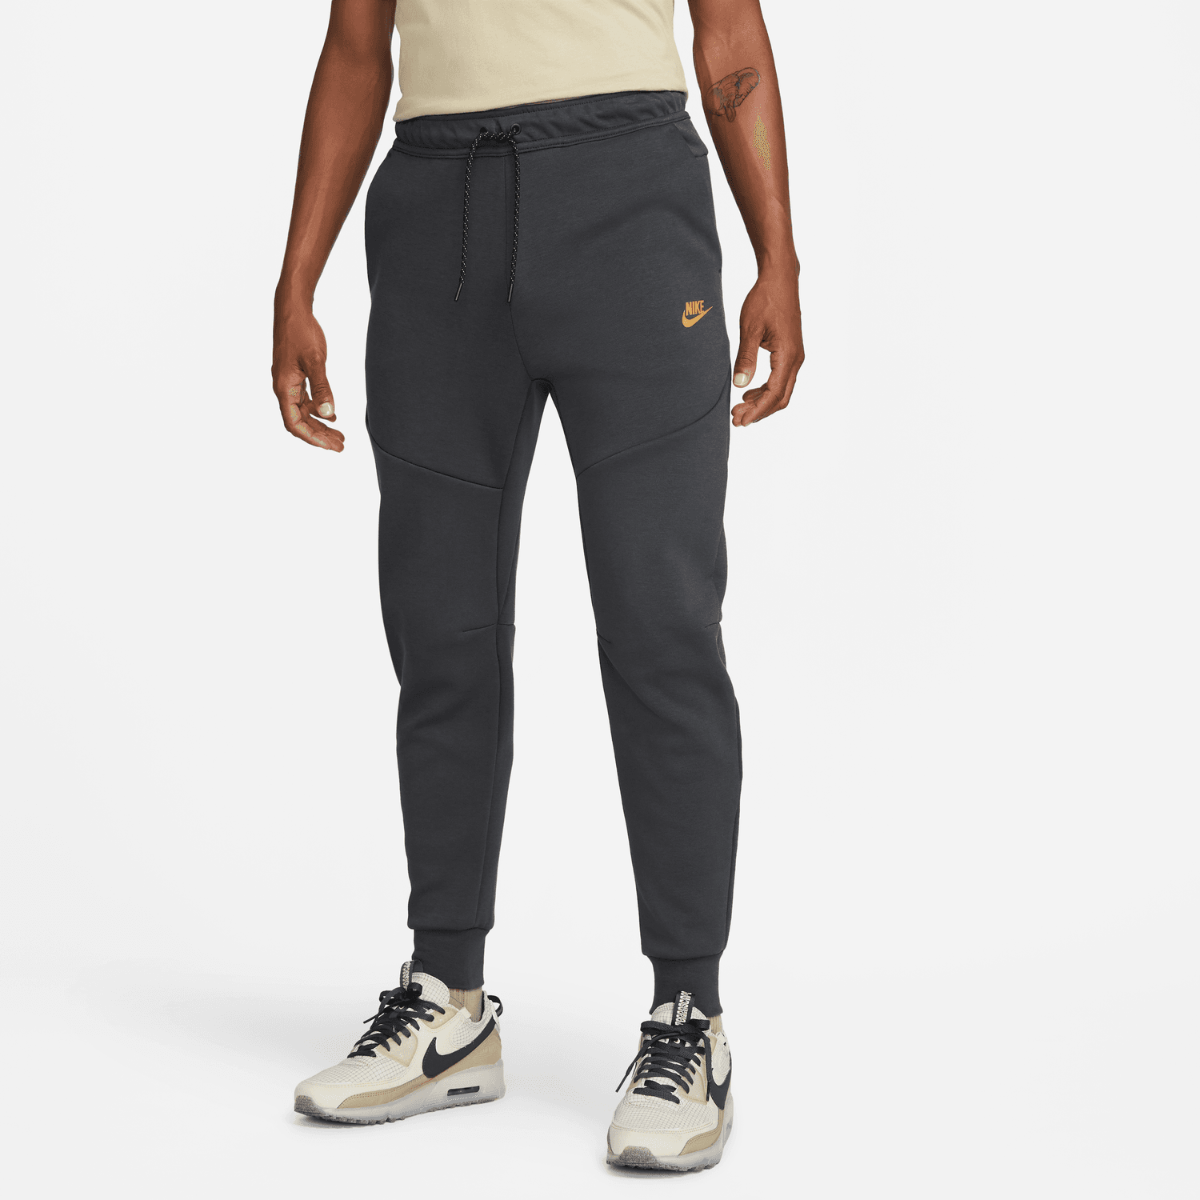 Nike - Air - Pantalon de jogging - Noir